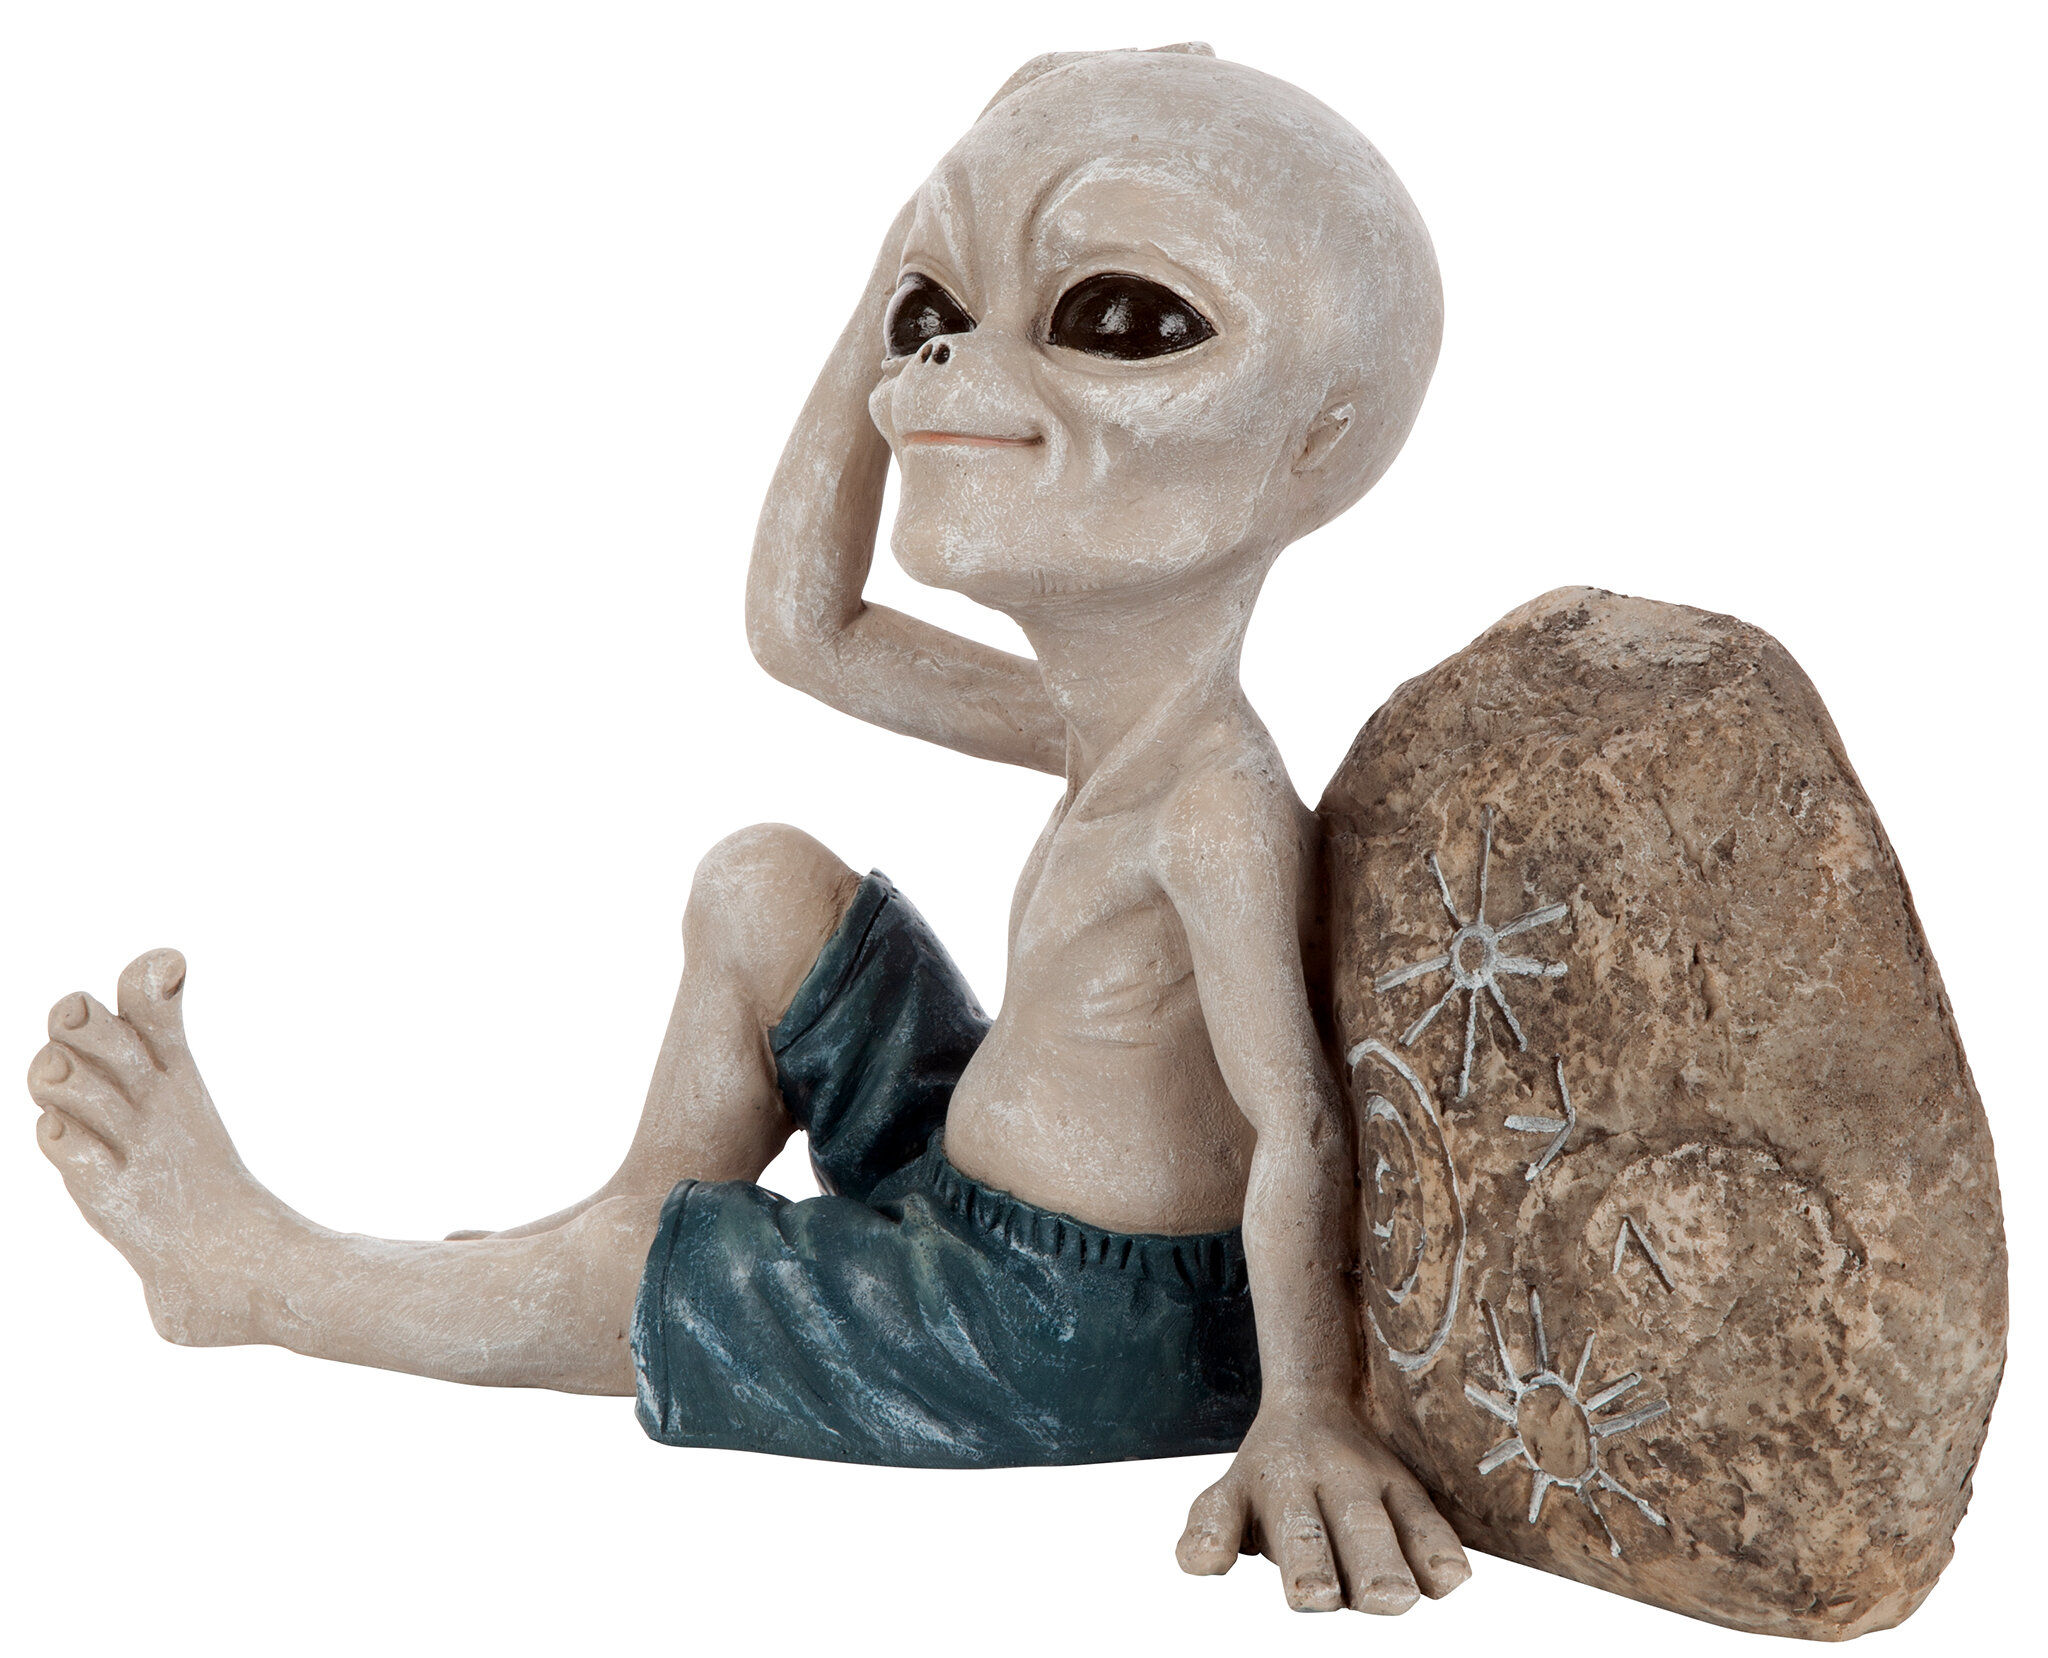 alien figurines for sale